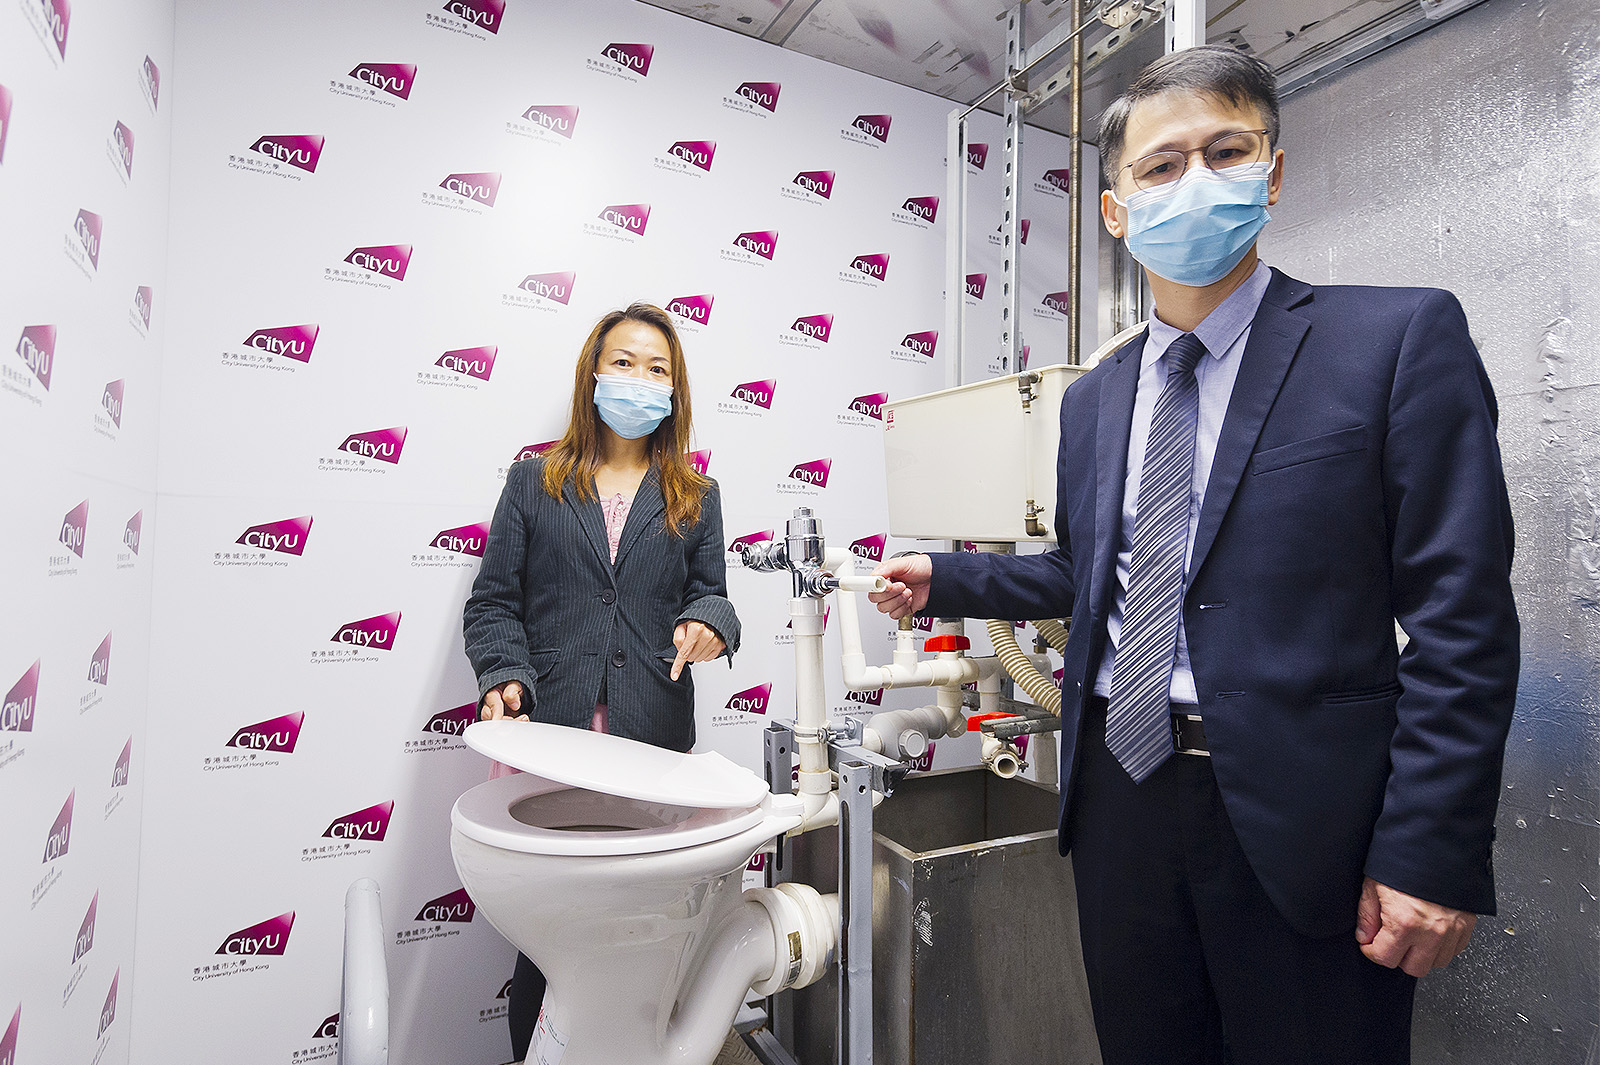 Flushing the Toilet May Fling Coronavirus Aerosols All Over - The New York  Times